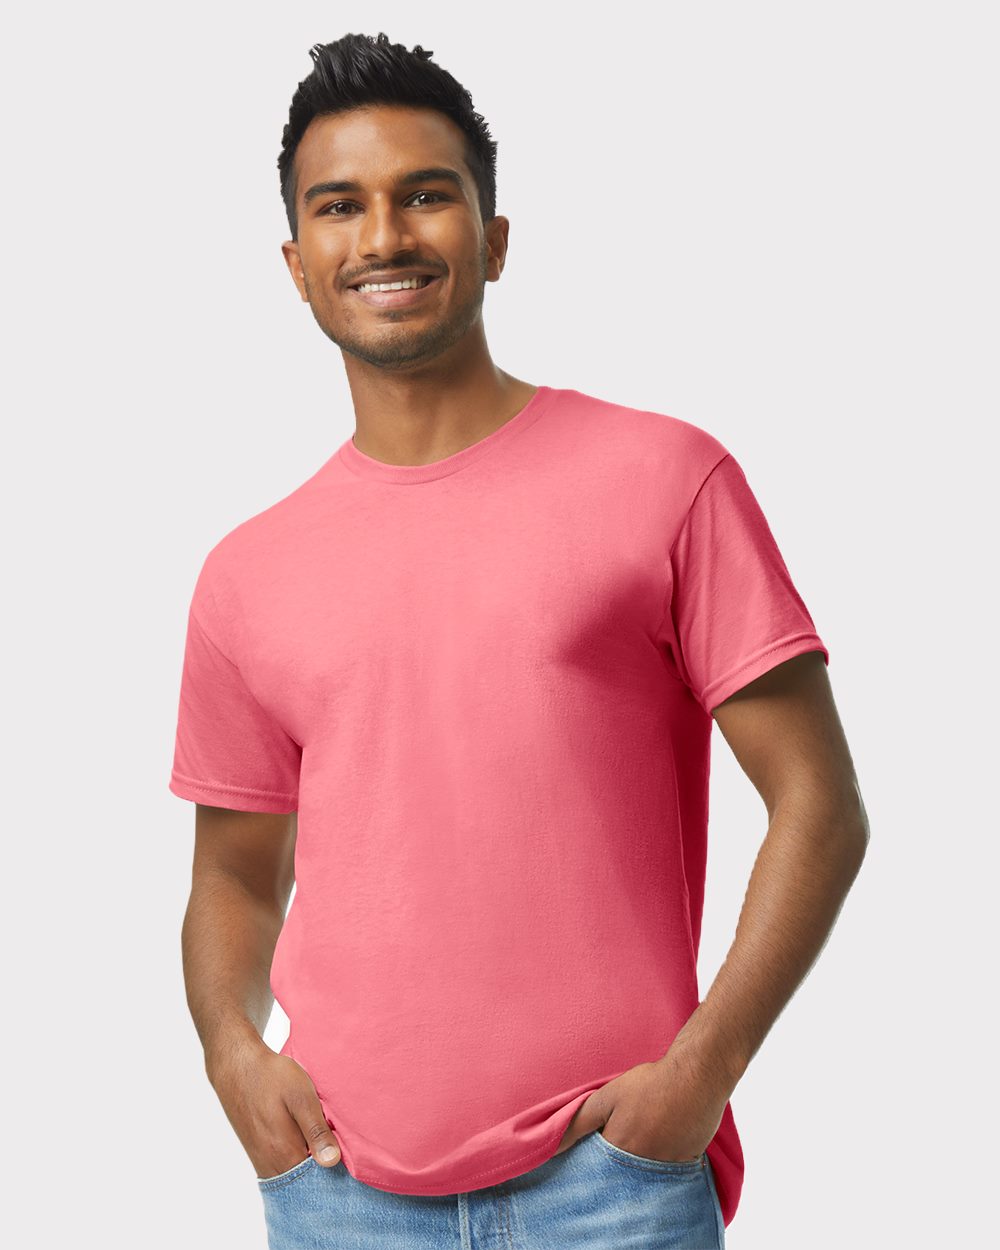 NIB - Men's T-Shirt Short Sleeve - Tough Guys Wear Pink Cancer - image 5 of 5